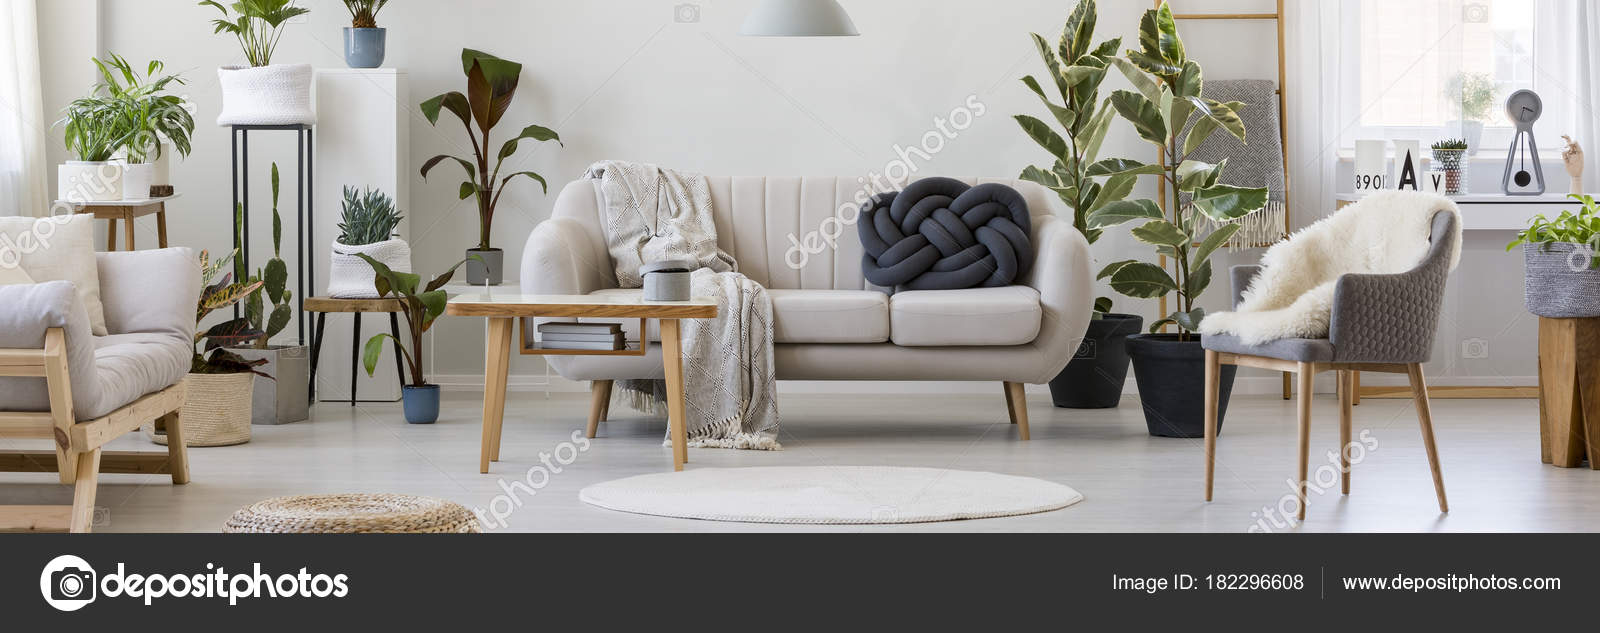 Floral Living Room With Sofa Stock Photo Photographeeeu